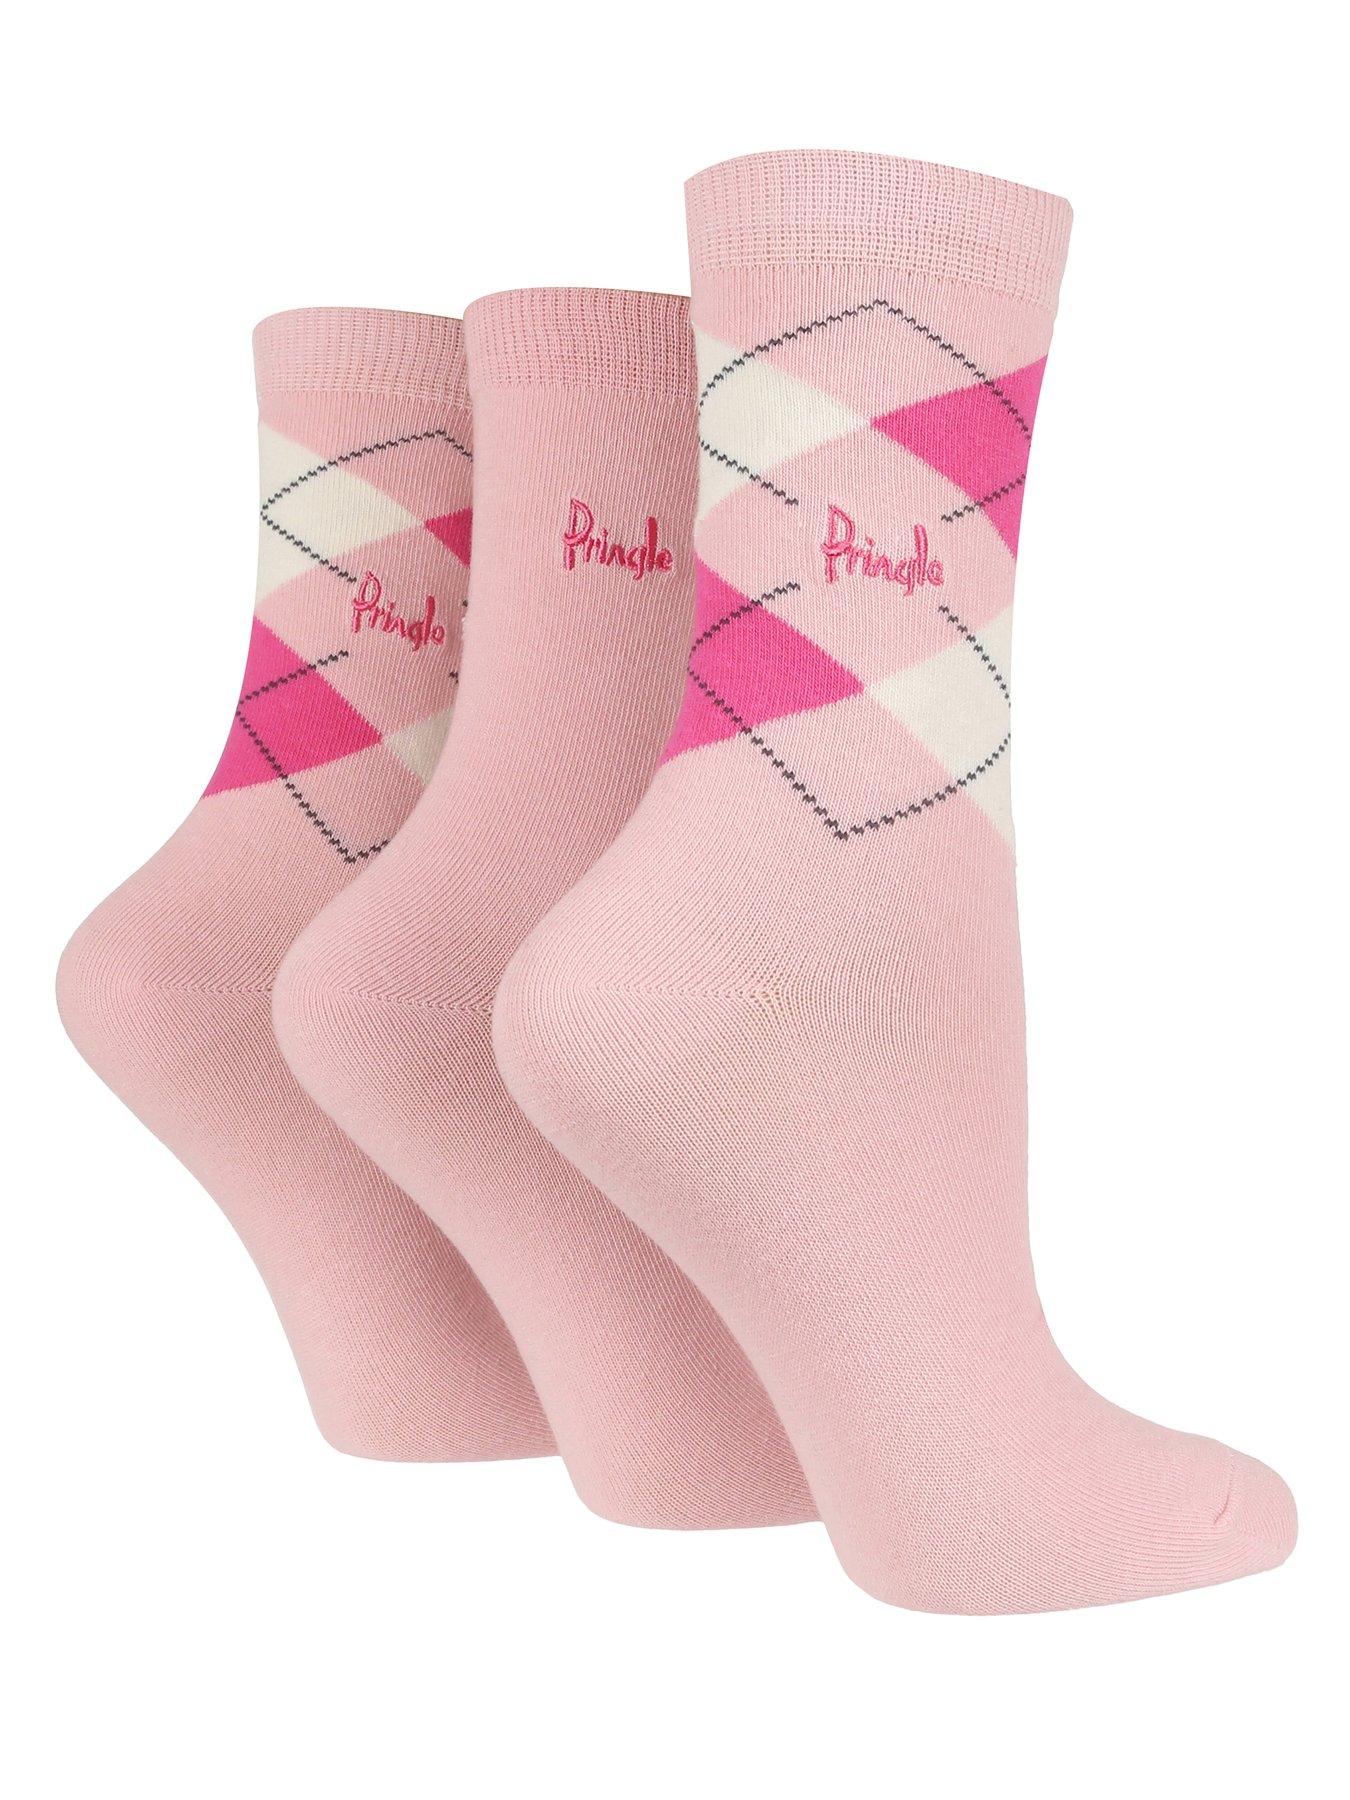 Pringle 3 Pack Argyle Socks - Pink